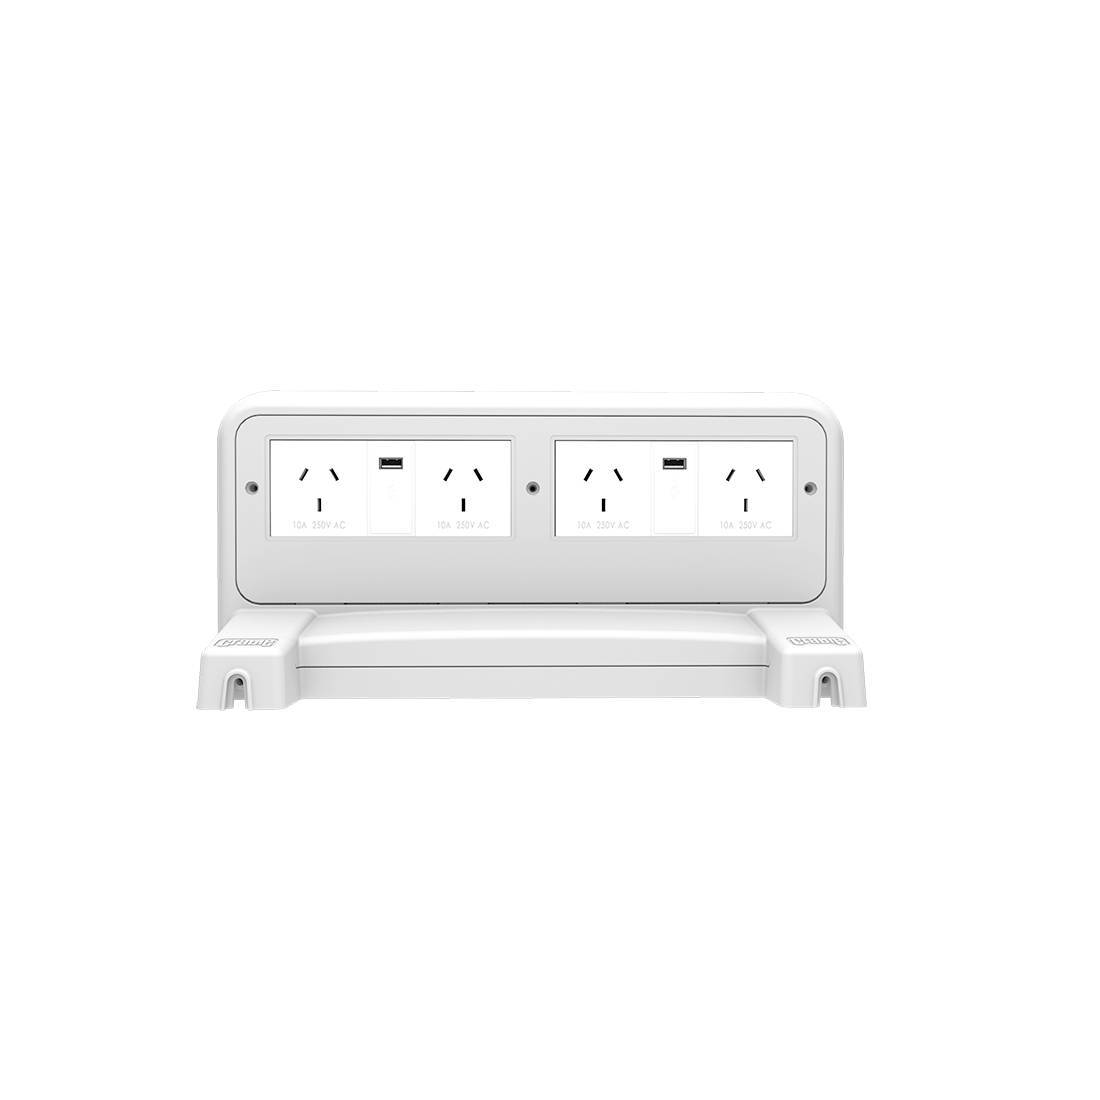 Charging Shelf Station - Australasia Type I - Wireless, USB and Socket Charging